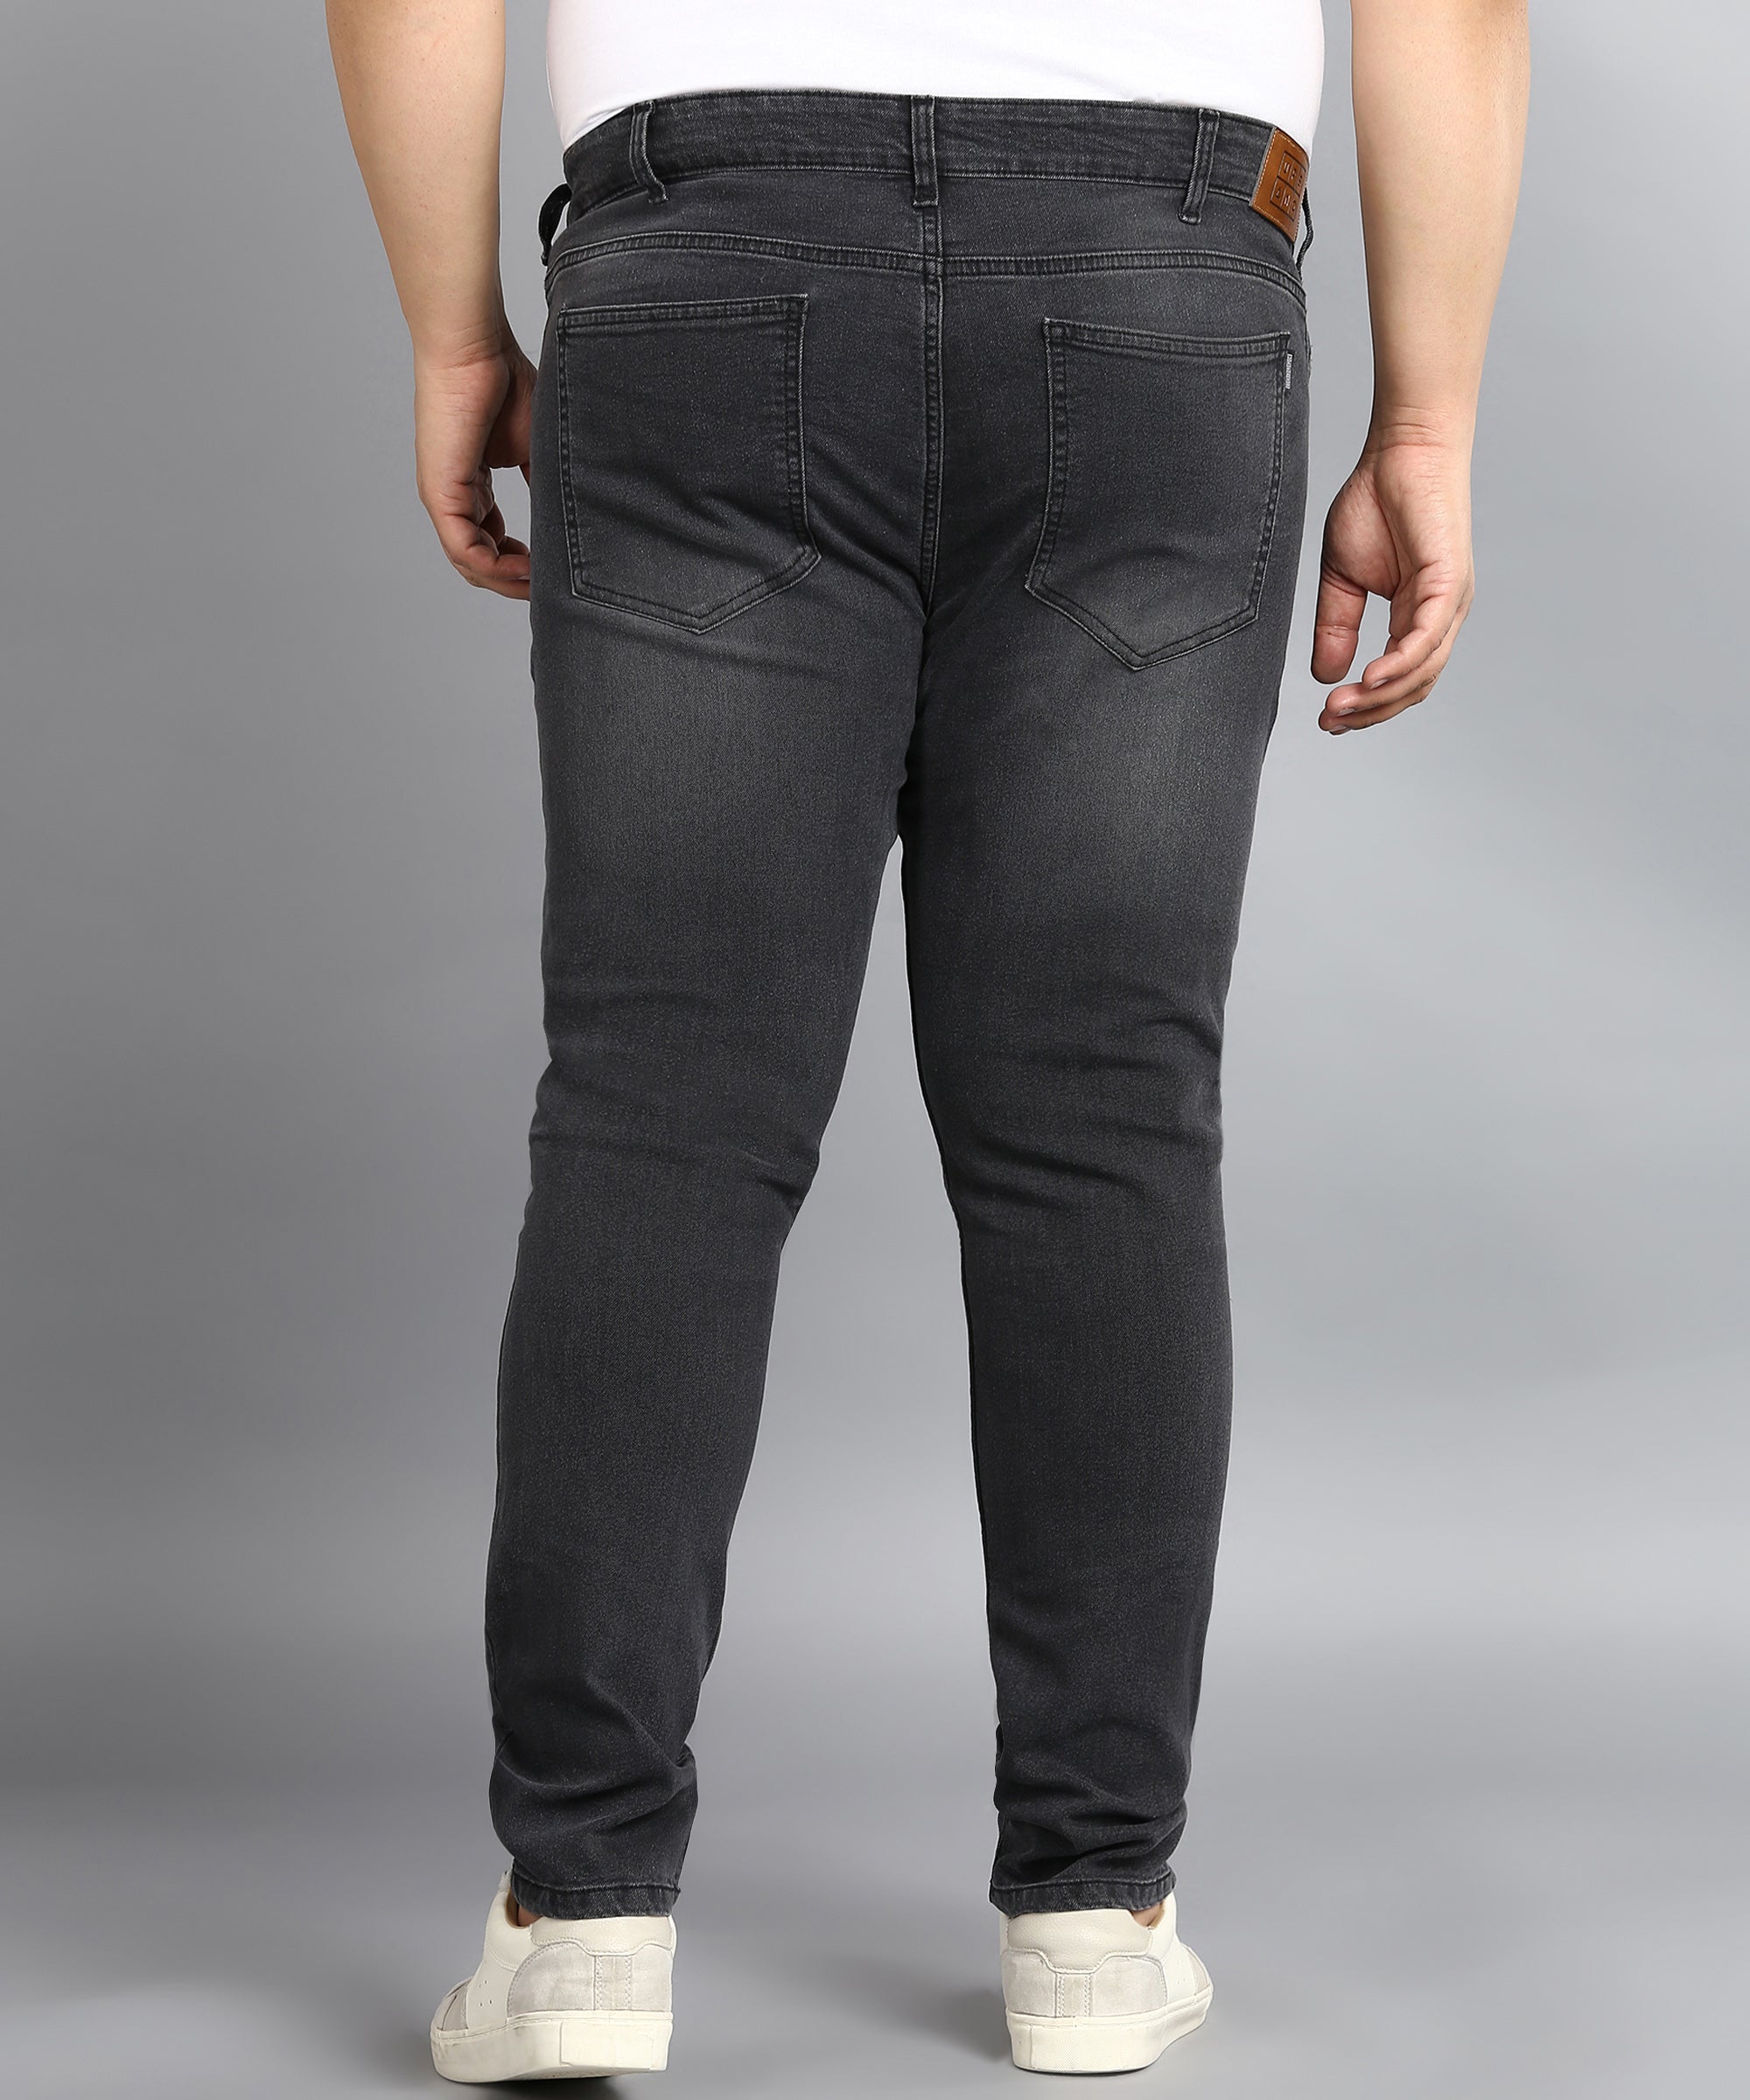 Plus Men's Carbon Grey Regular Fit Washed Jeans Stretchable